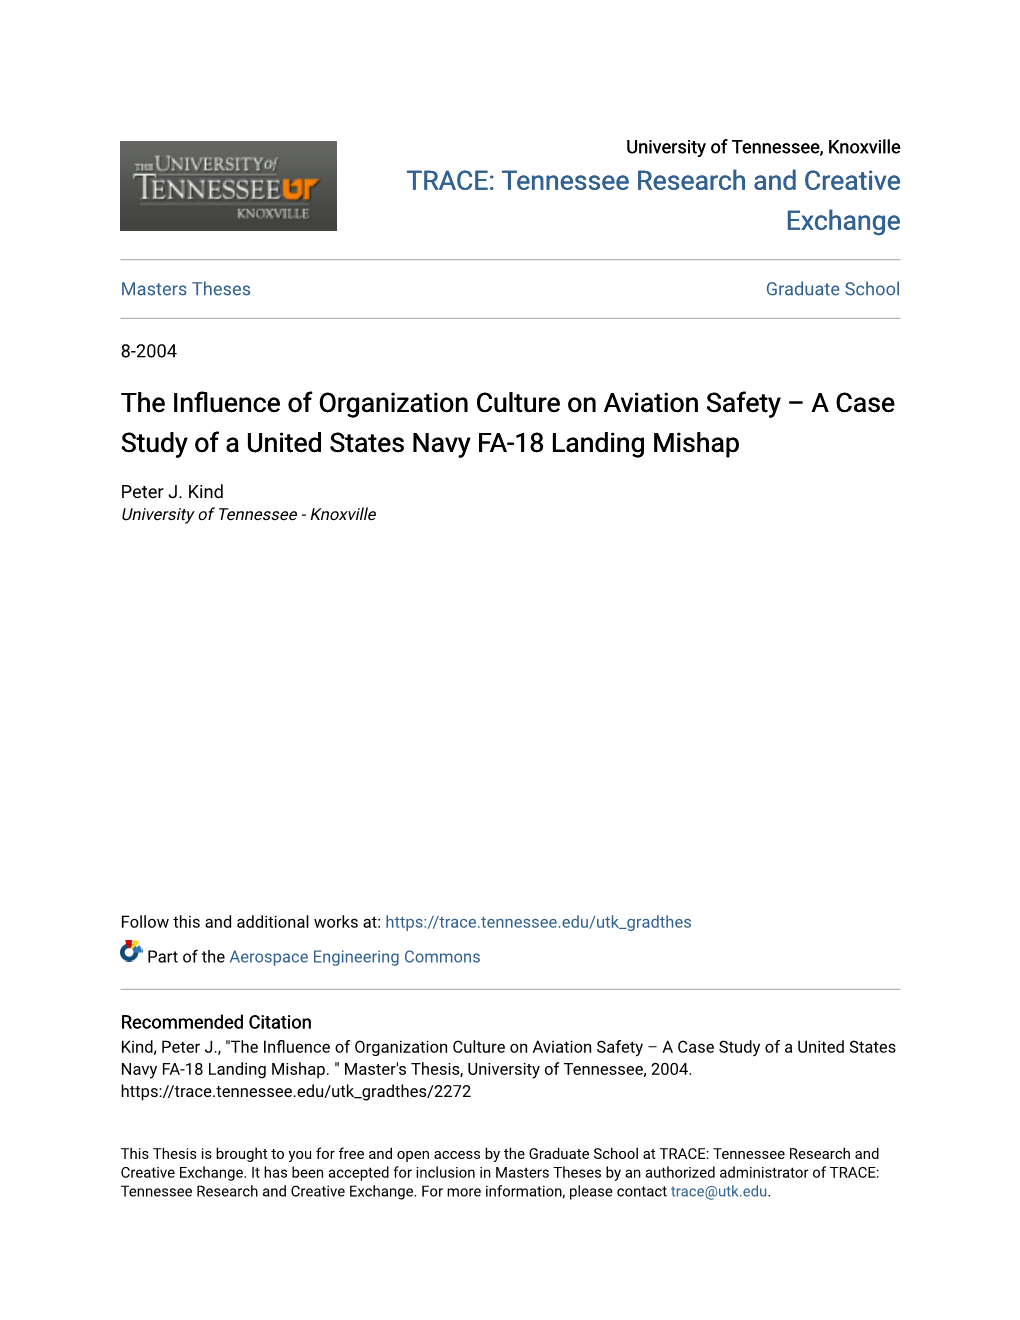 The Influence of Organization Culture on Aviation Safety Â•Fi a Case Study